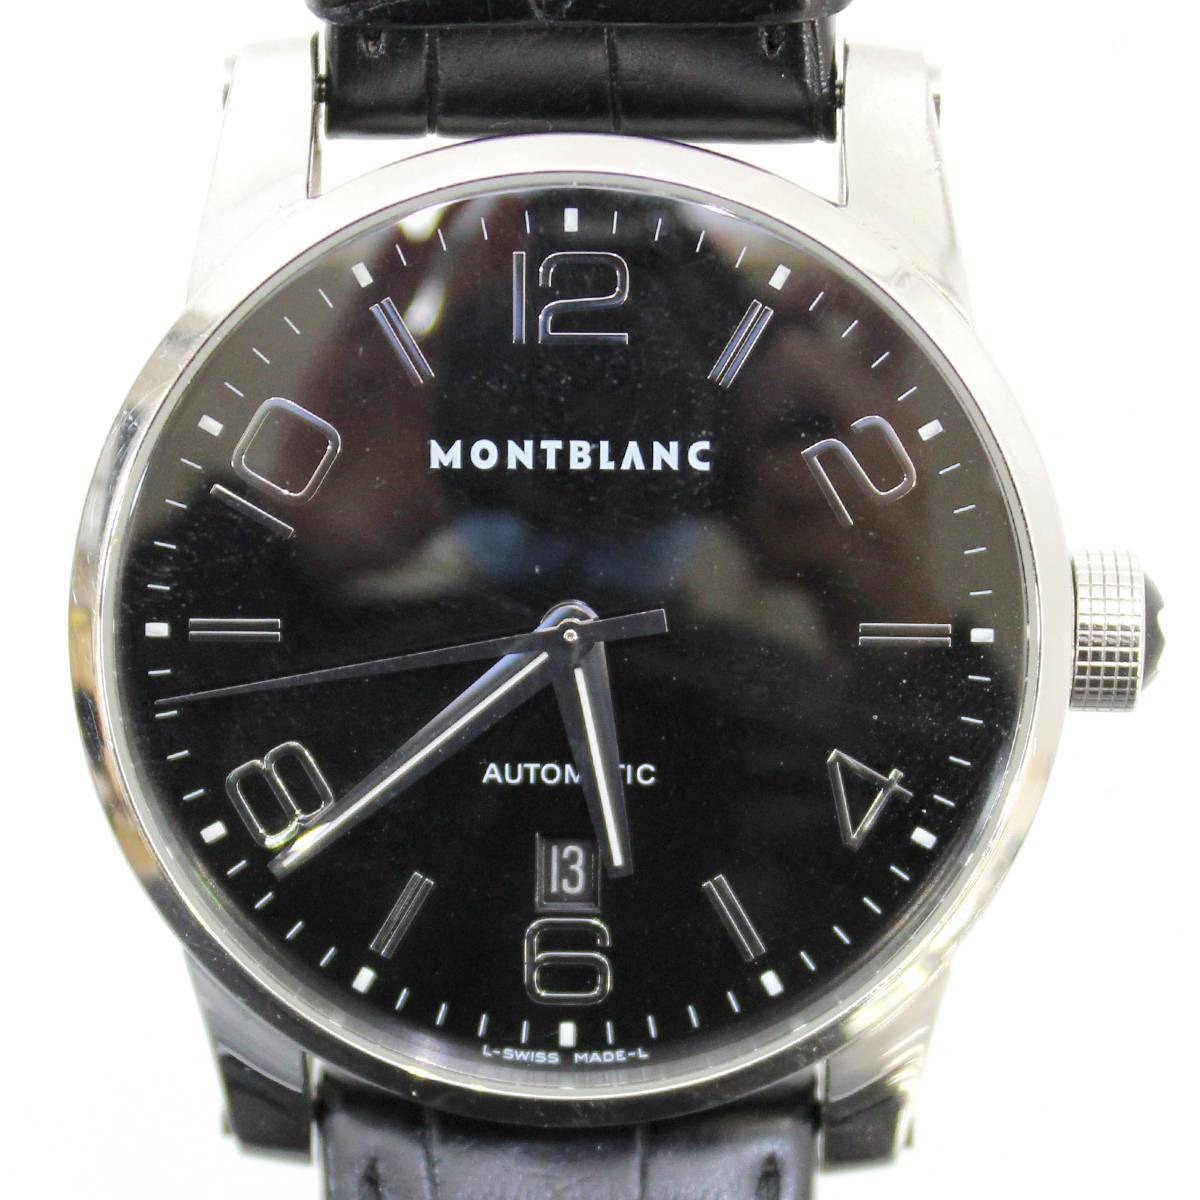 MONTBLANC/ Montblanc time War car wristwatch SS black user's manual 7070 PB211610 FS B rank 